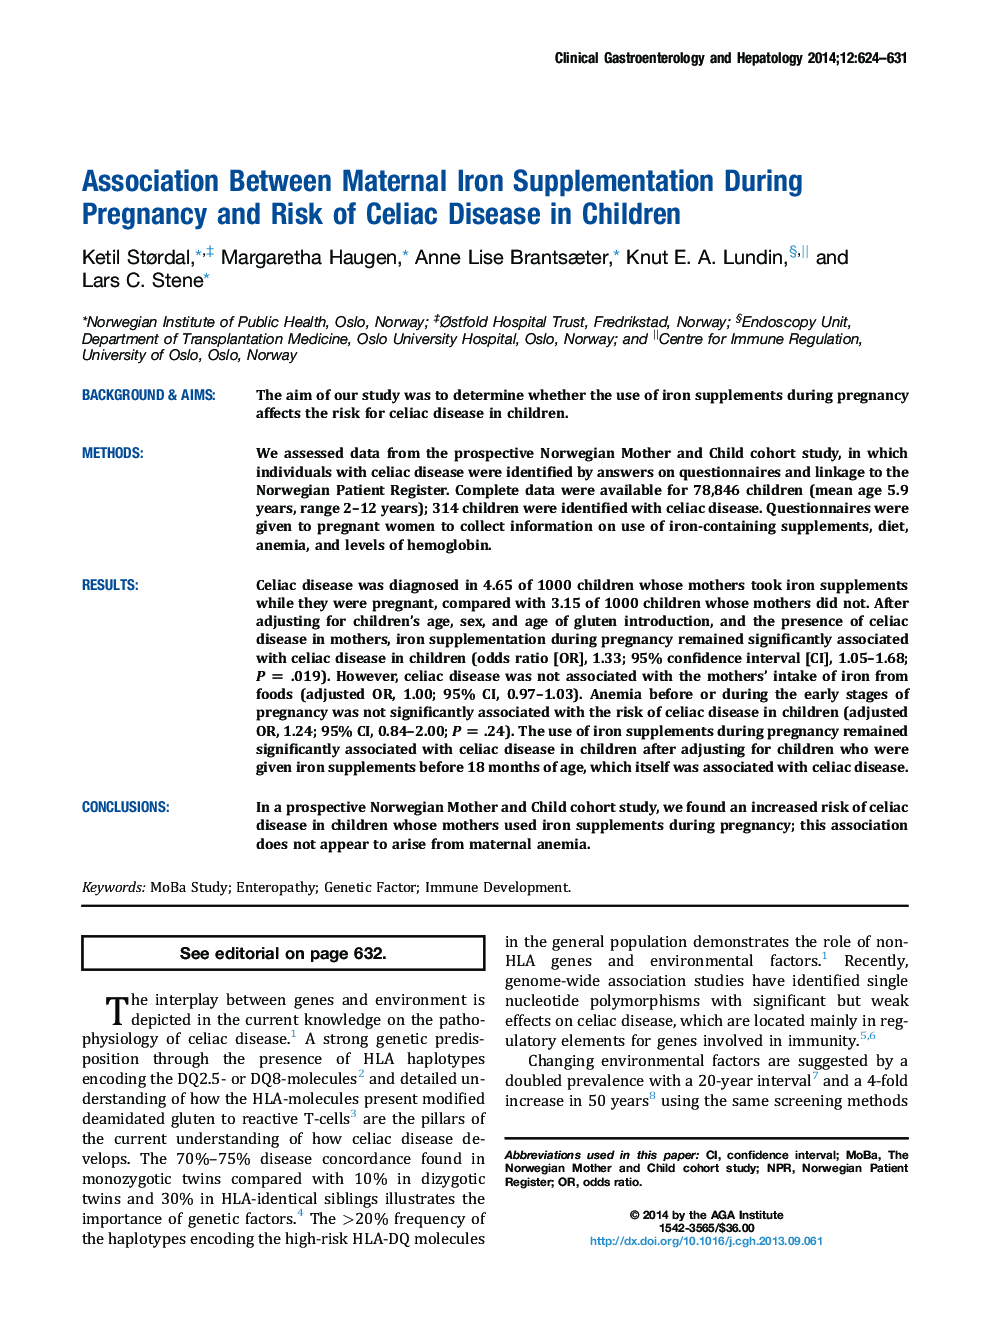 Association Between Maternal Iron Supplementation During Pregnancy and Risk of Celiac Disease in Children